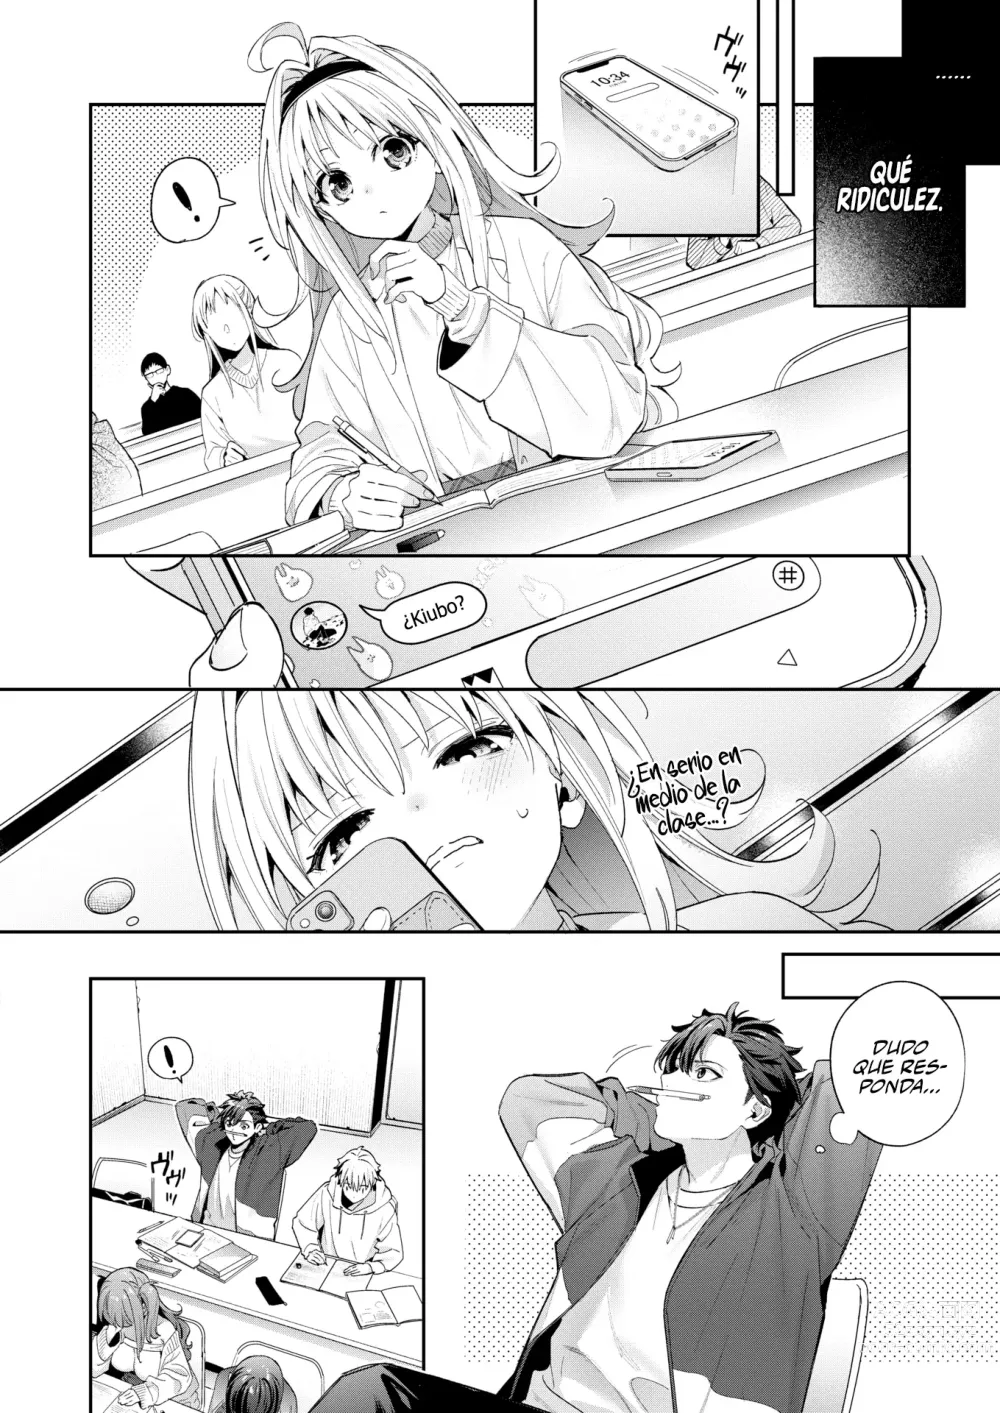 Page 4 of manga Melting Snow